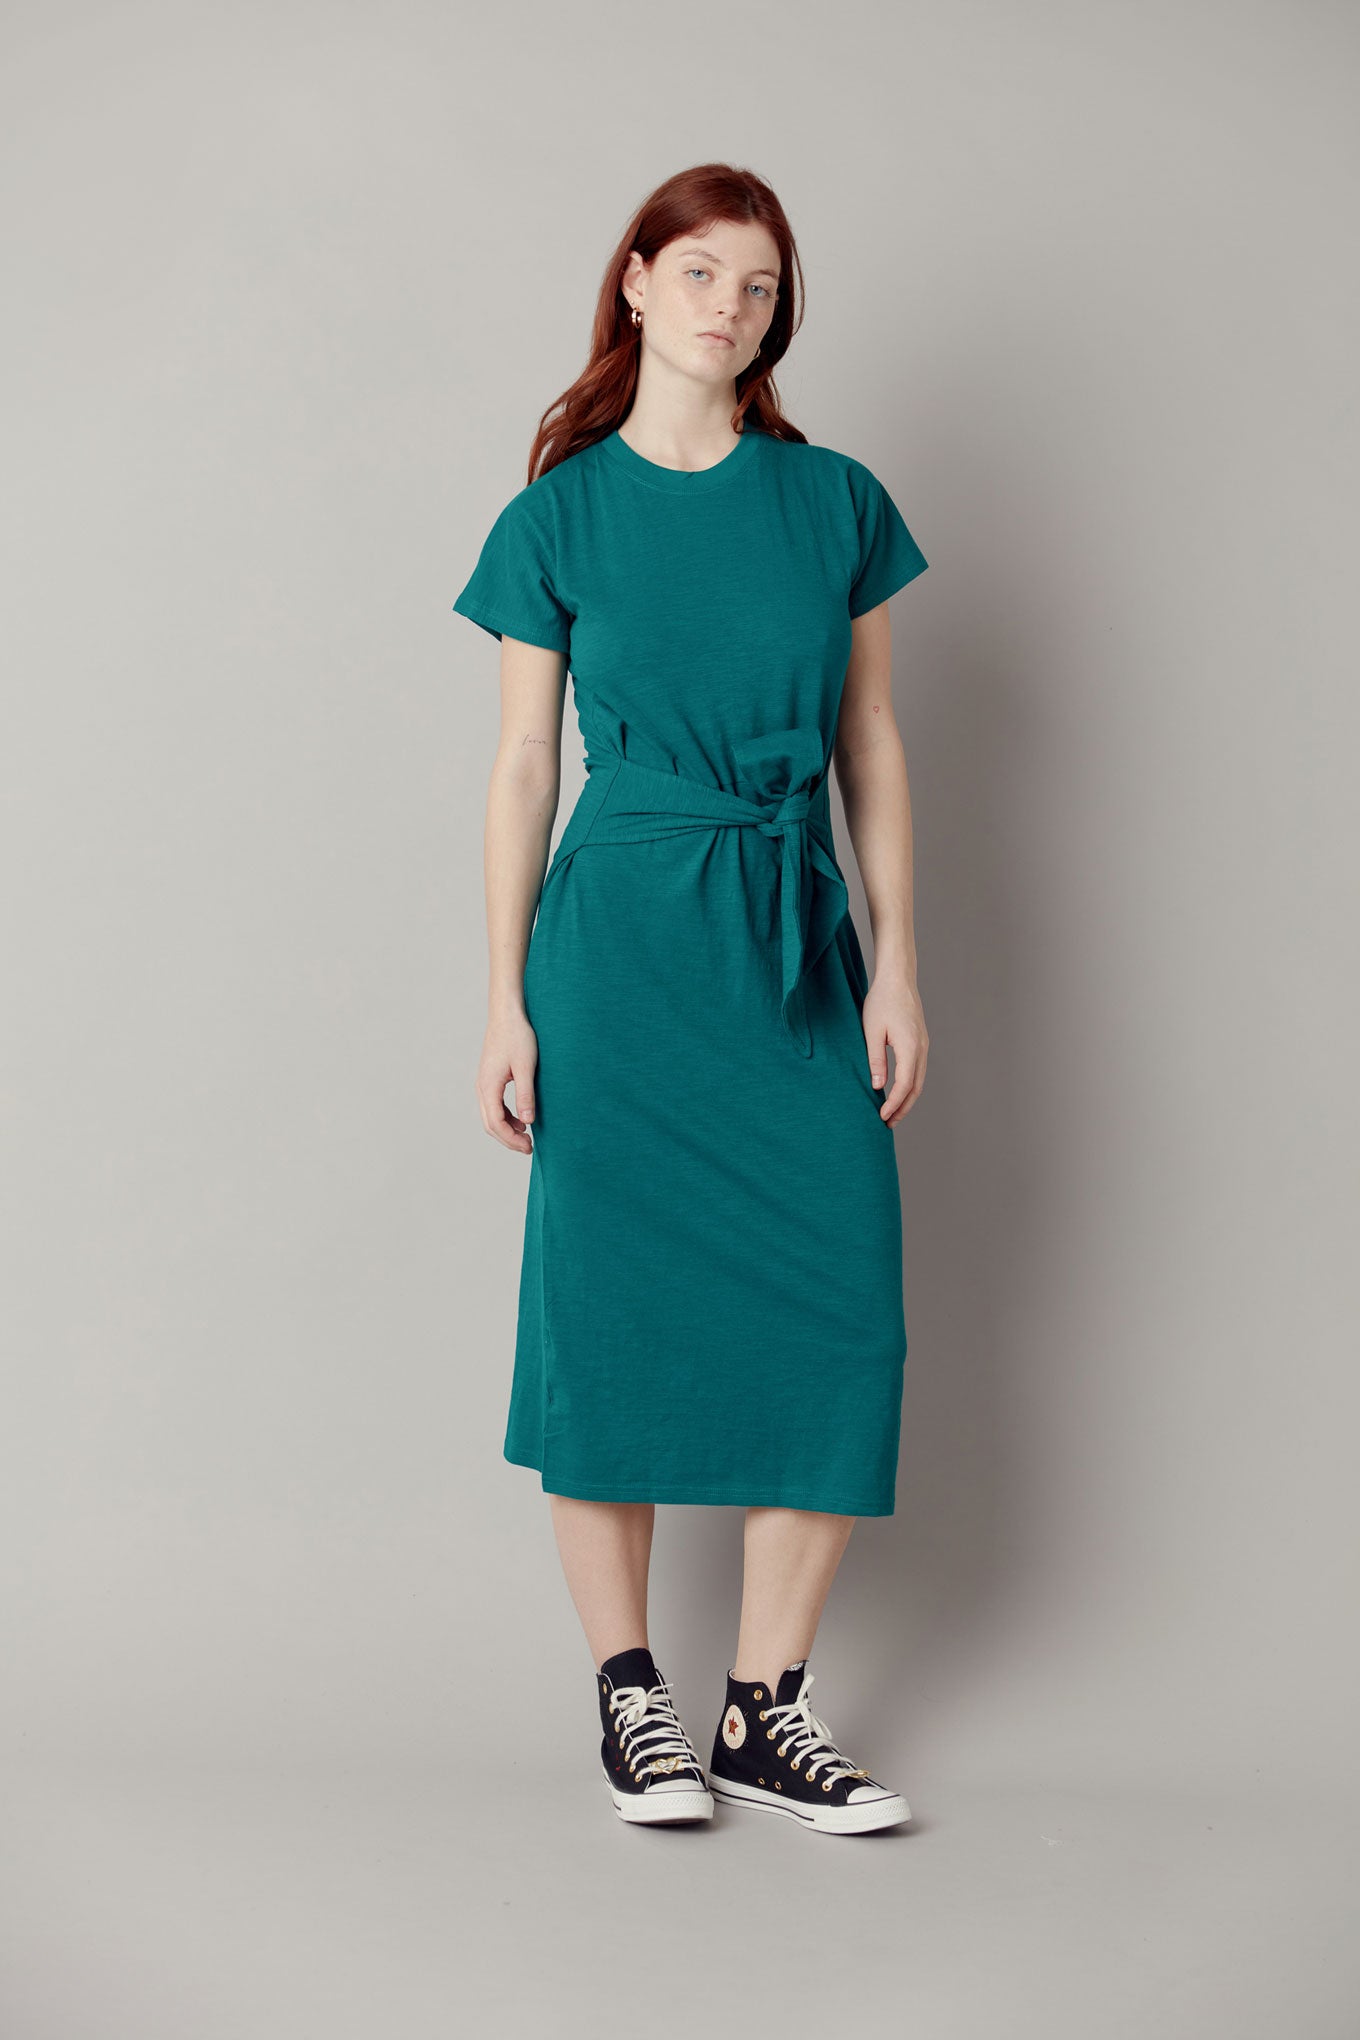 FONDA GOTS Organic Cotton Dress - Teal Green, SIZE 5 / UK 16 / EUR 44